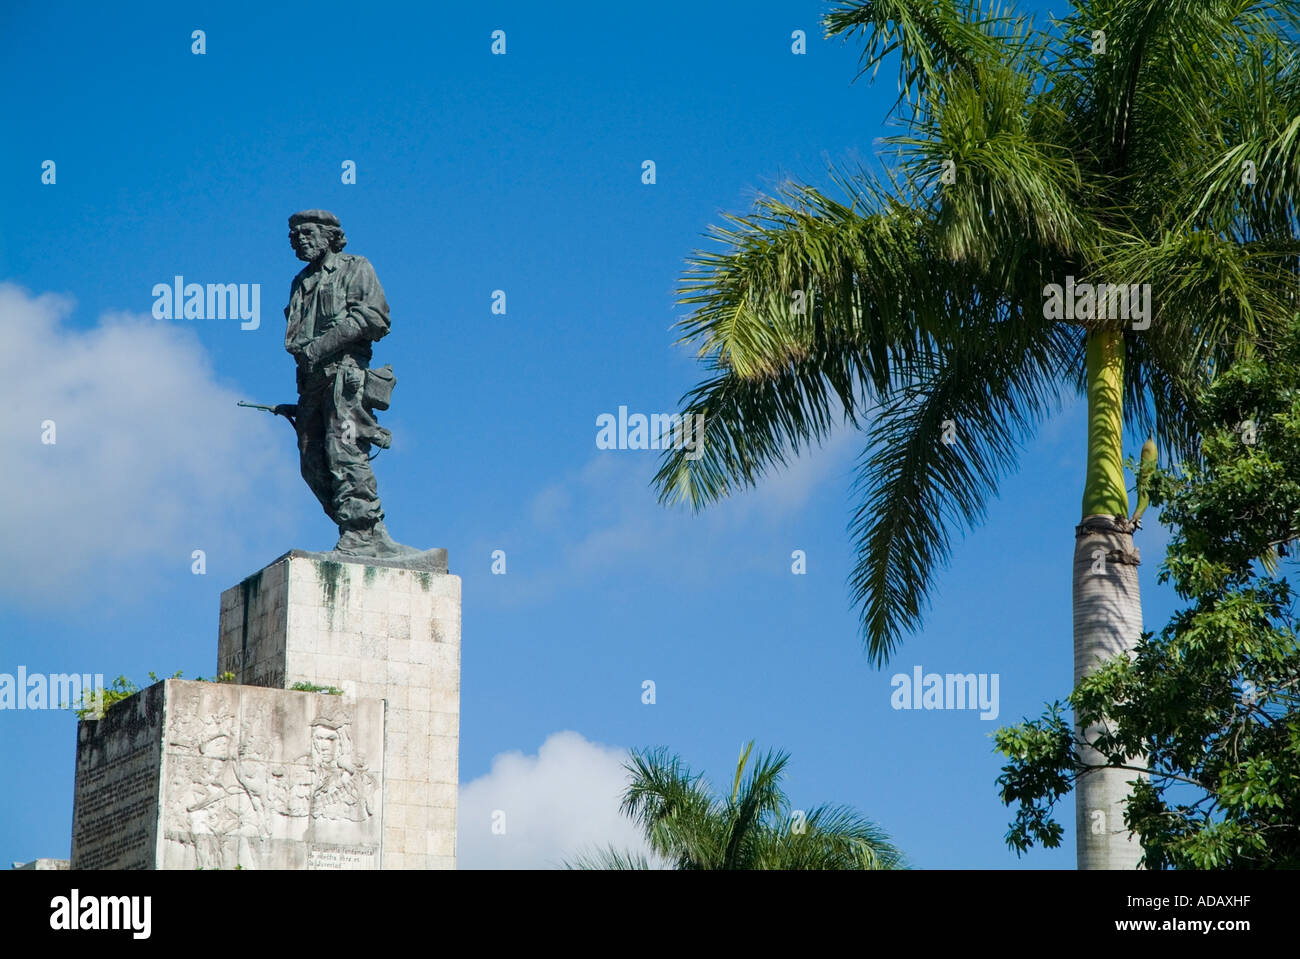 Che Guevara Memorial Statue on the Plaza de la Revolucion, Santa Clara, Villa Clara, Cuba. Stock Photo